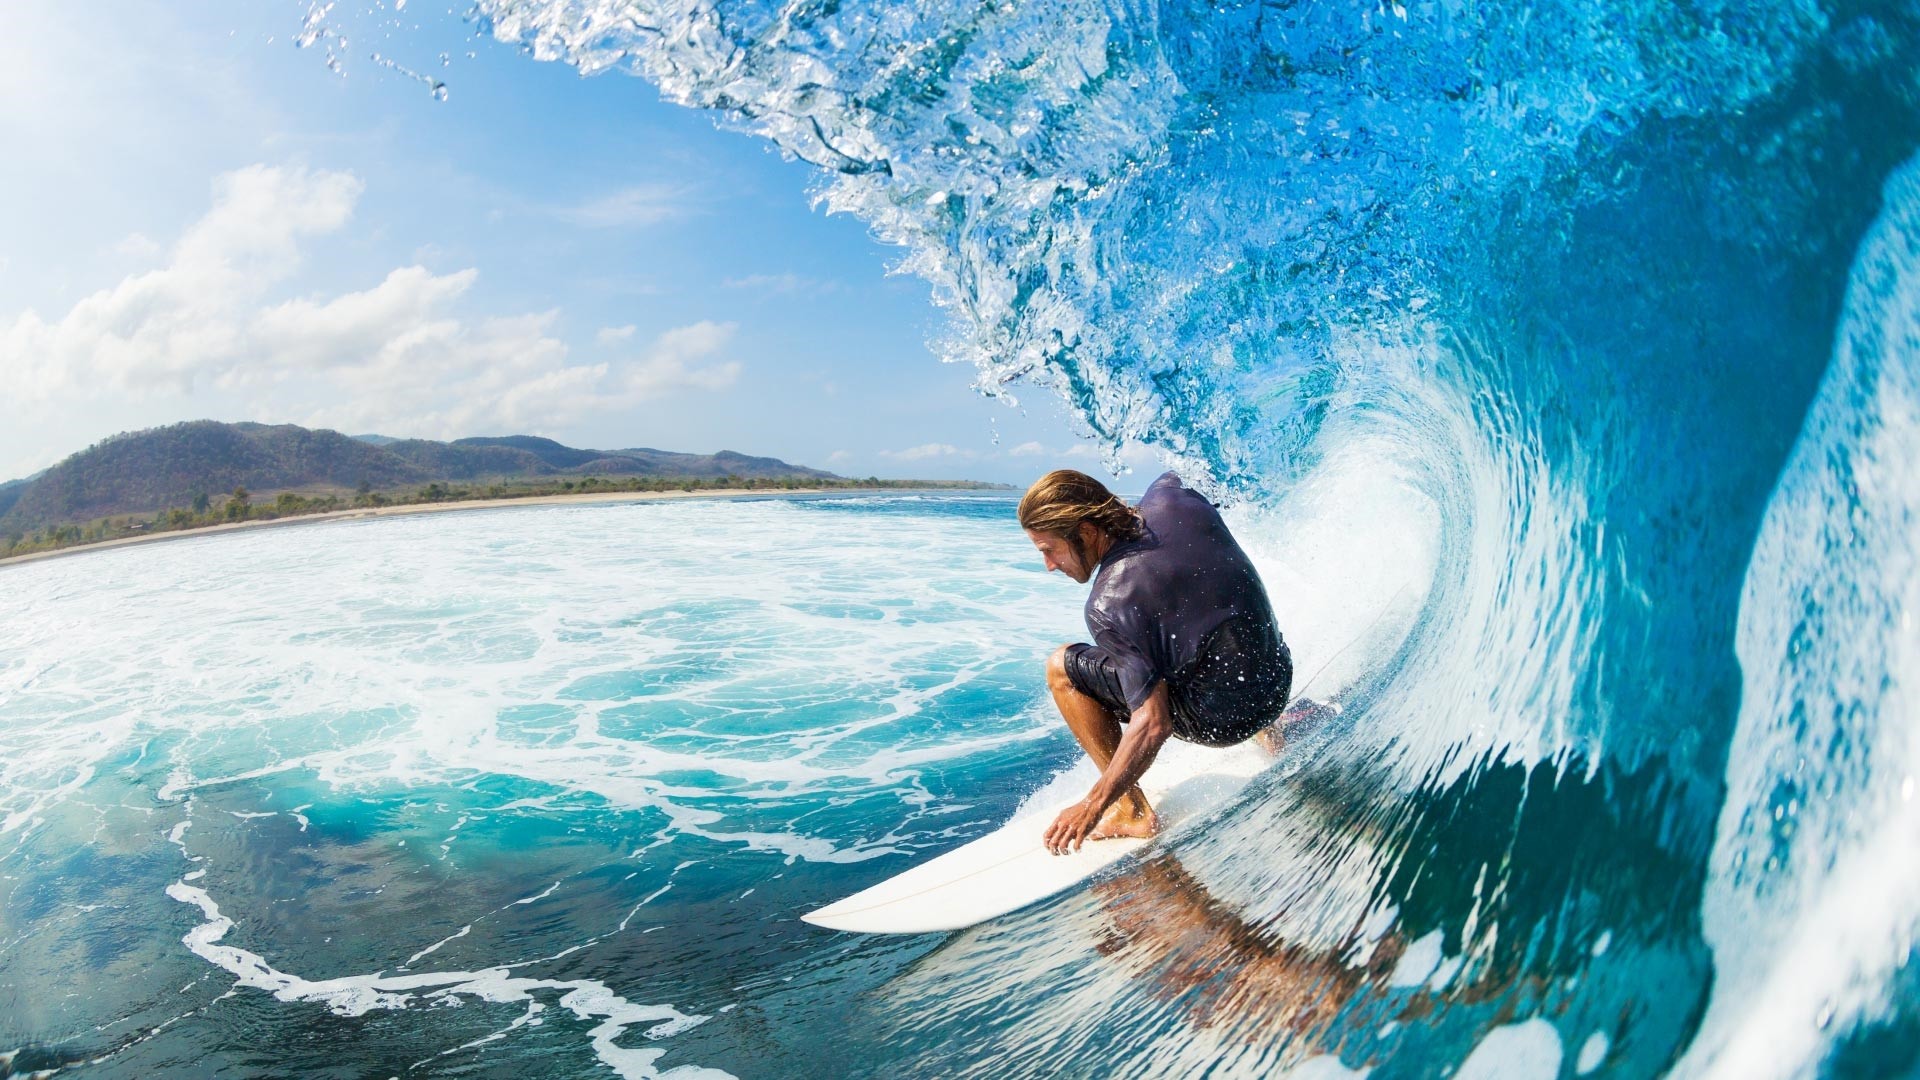 Surf wallpaper photo hd